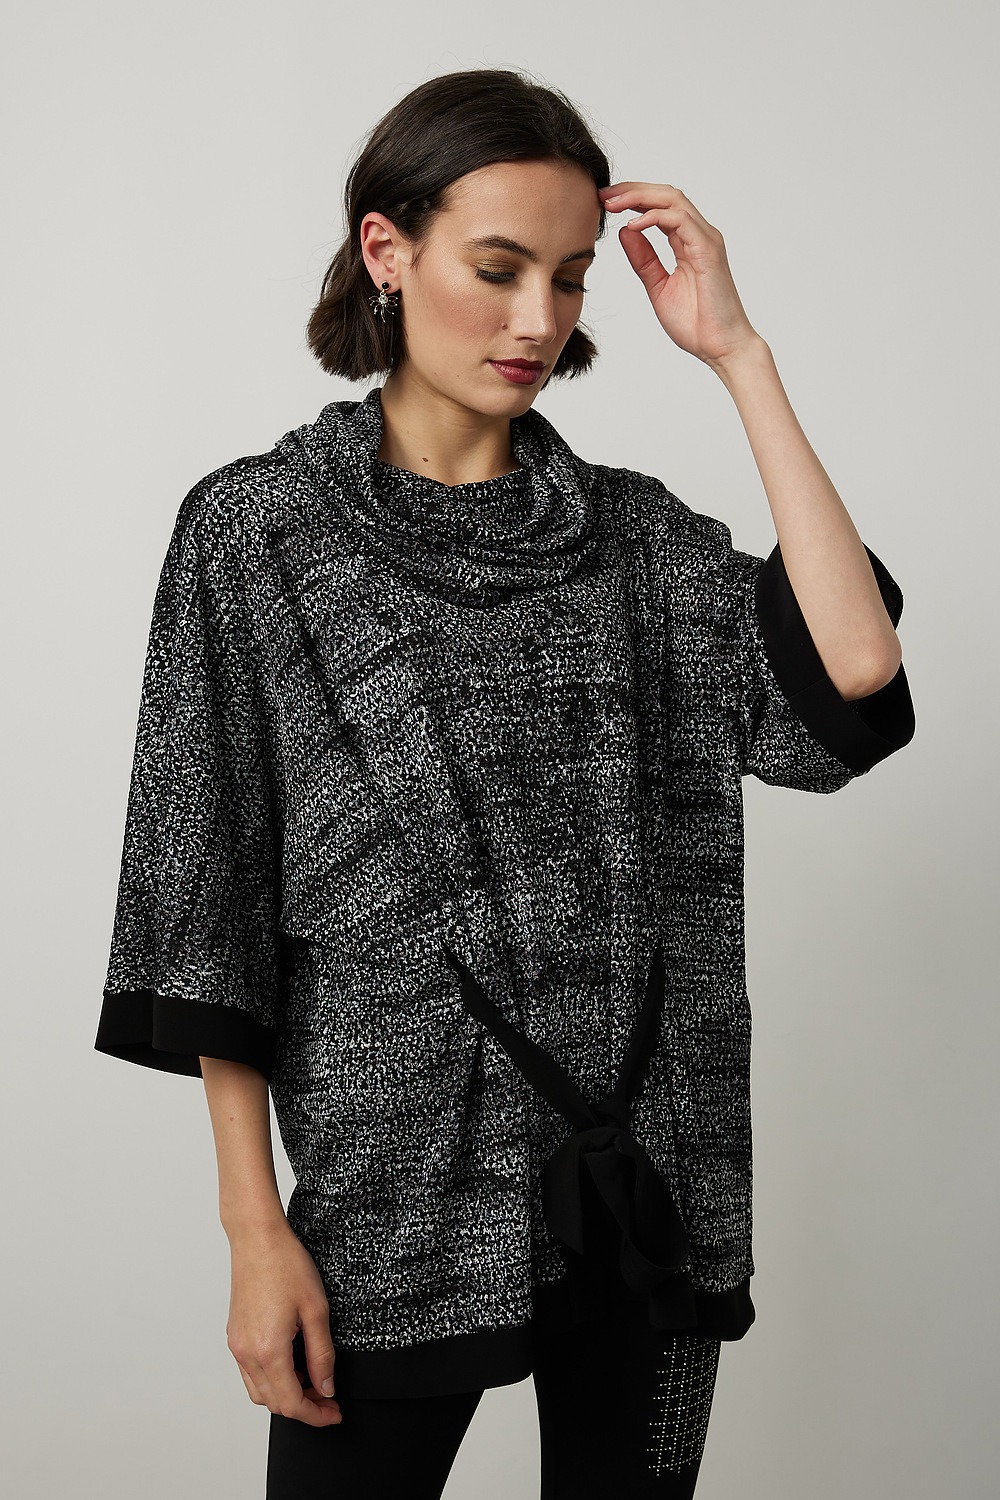 Joseph Ribkoff Jacquard Knit Top Style 214118. Black/silver/grey